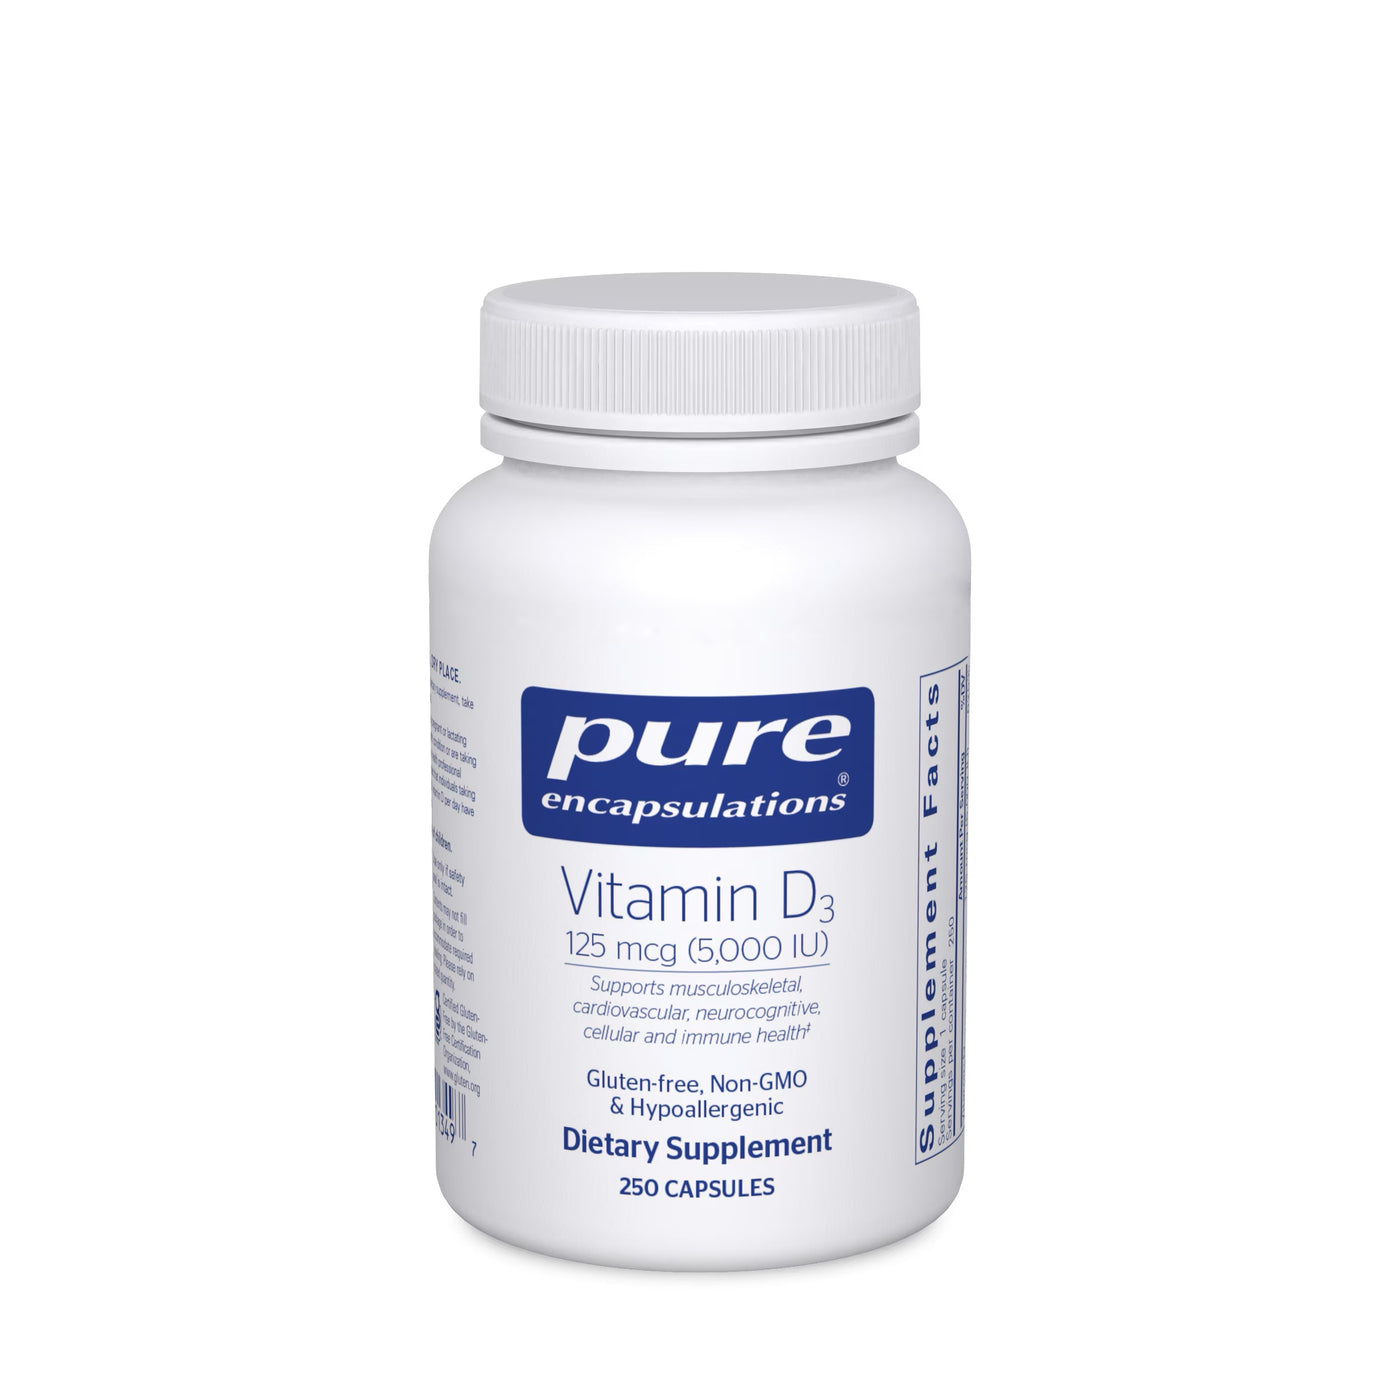 Vitamin D3 (5,000 IU)